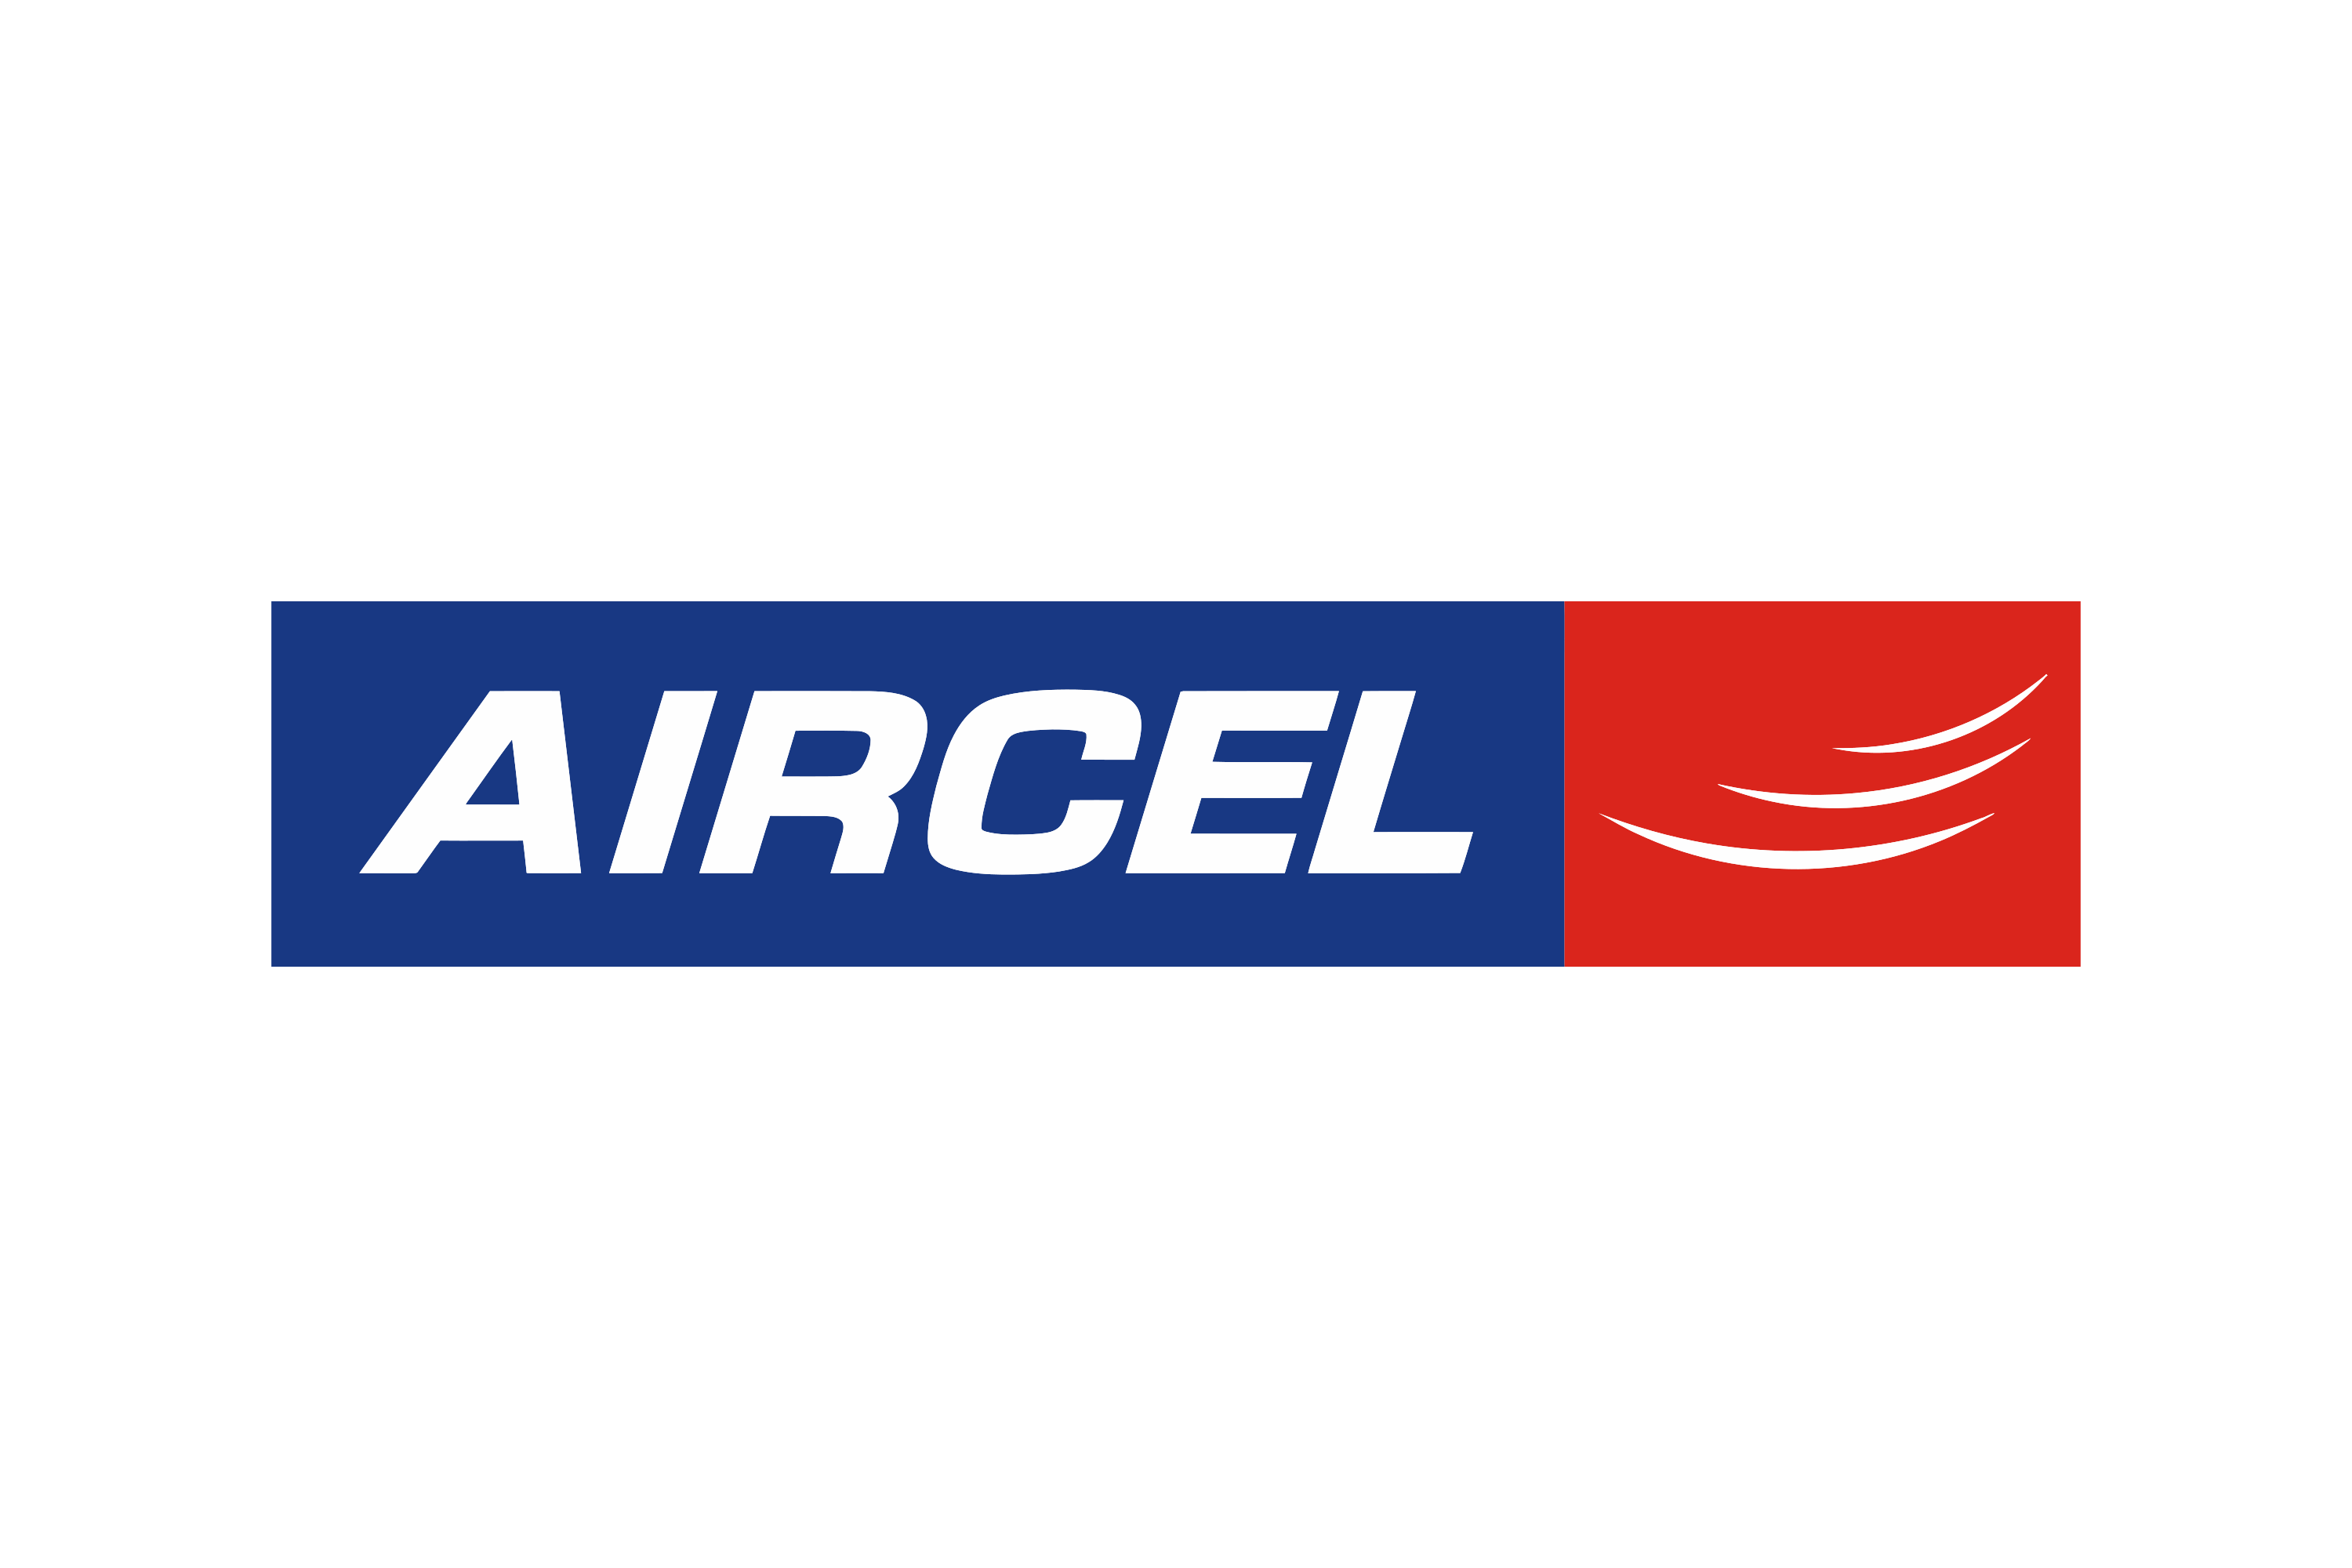 Download Aircel Logo in SVG Vector or PNG File Format - Logo.wine